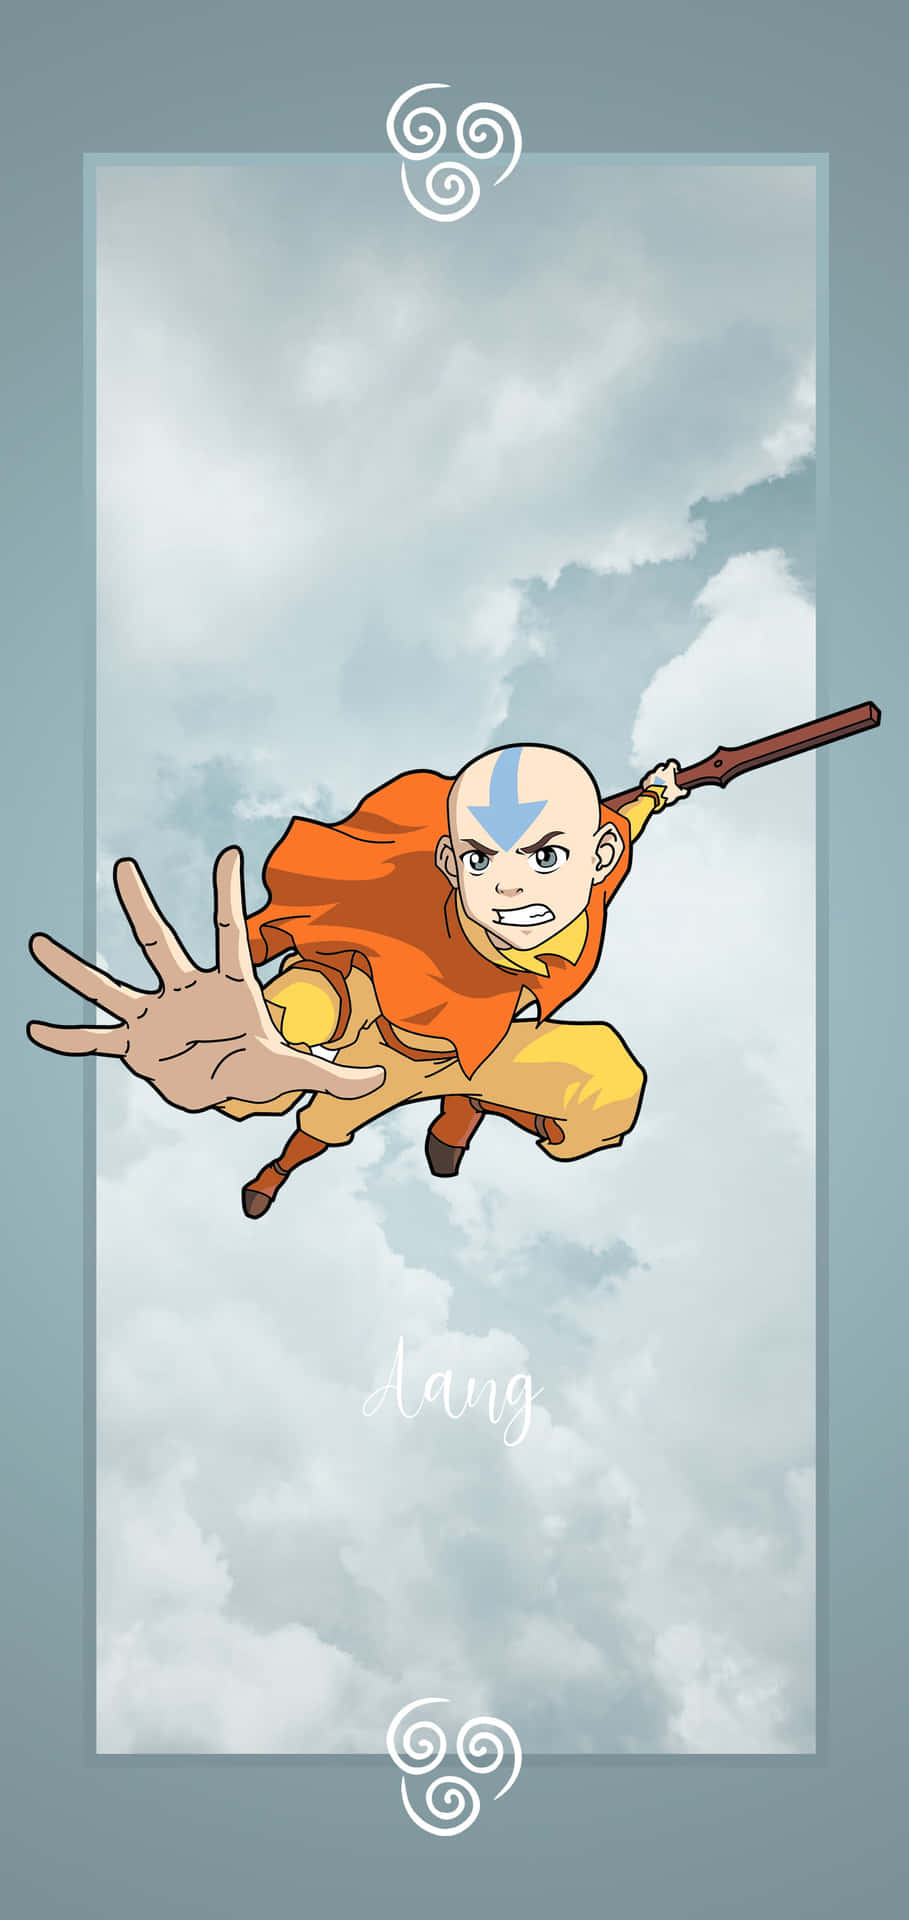 Avatar The Last Airbender - Aang In Meditation